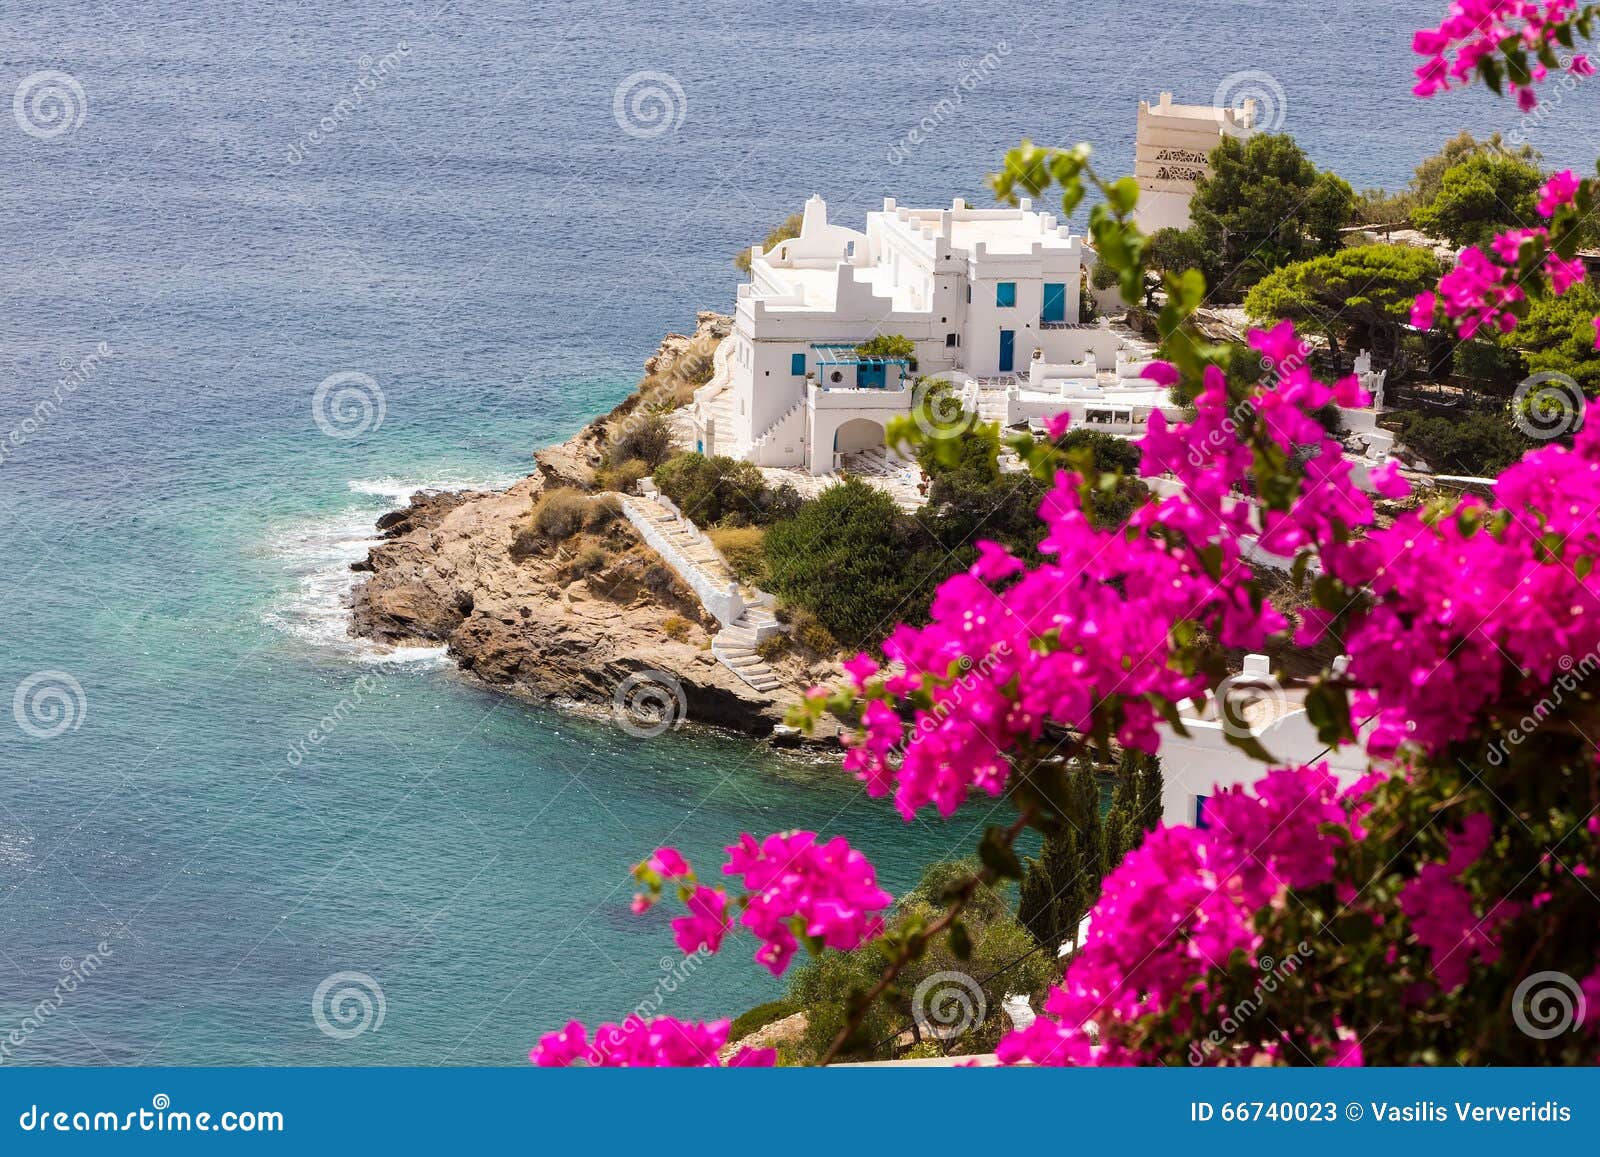 wonderful view of city buildings in ios island, greece